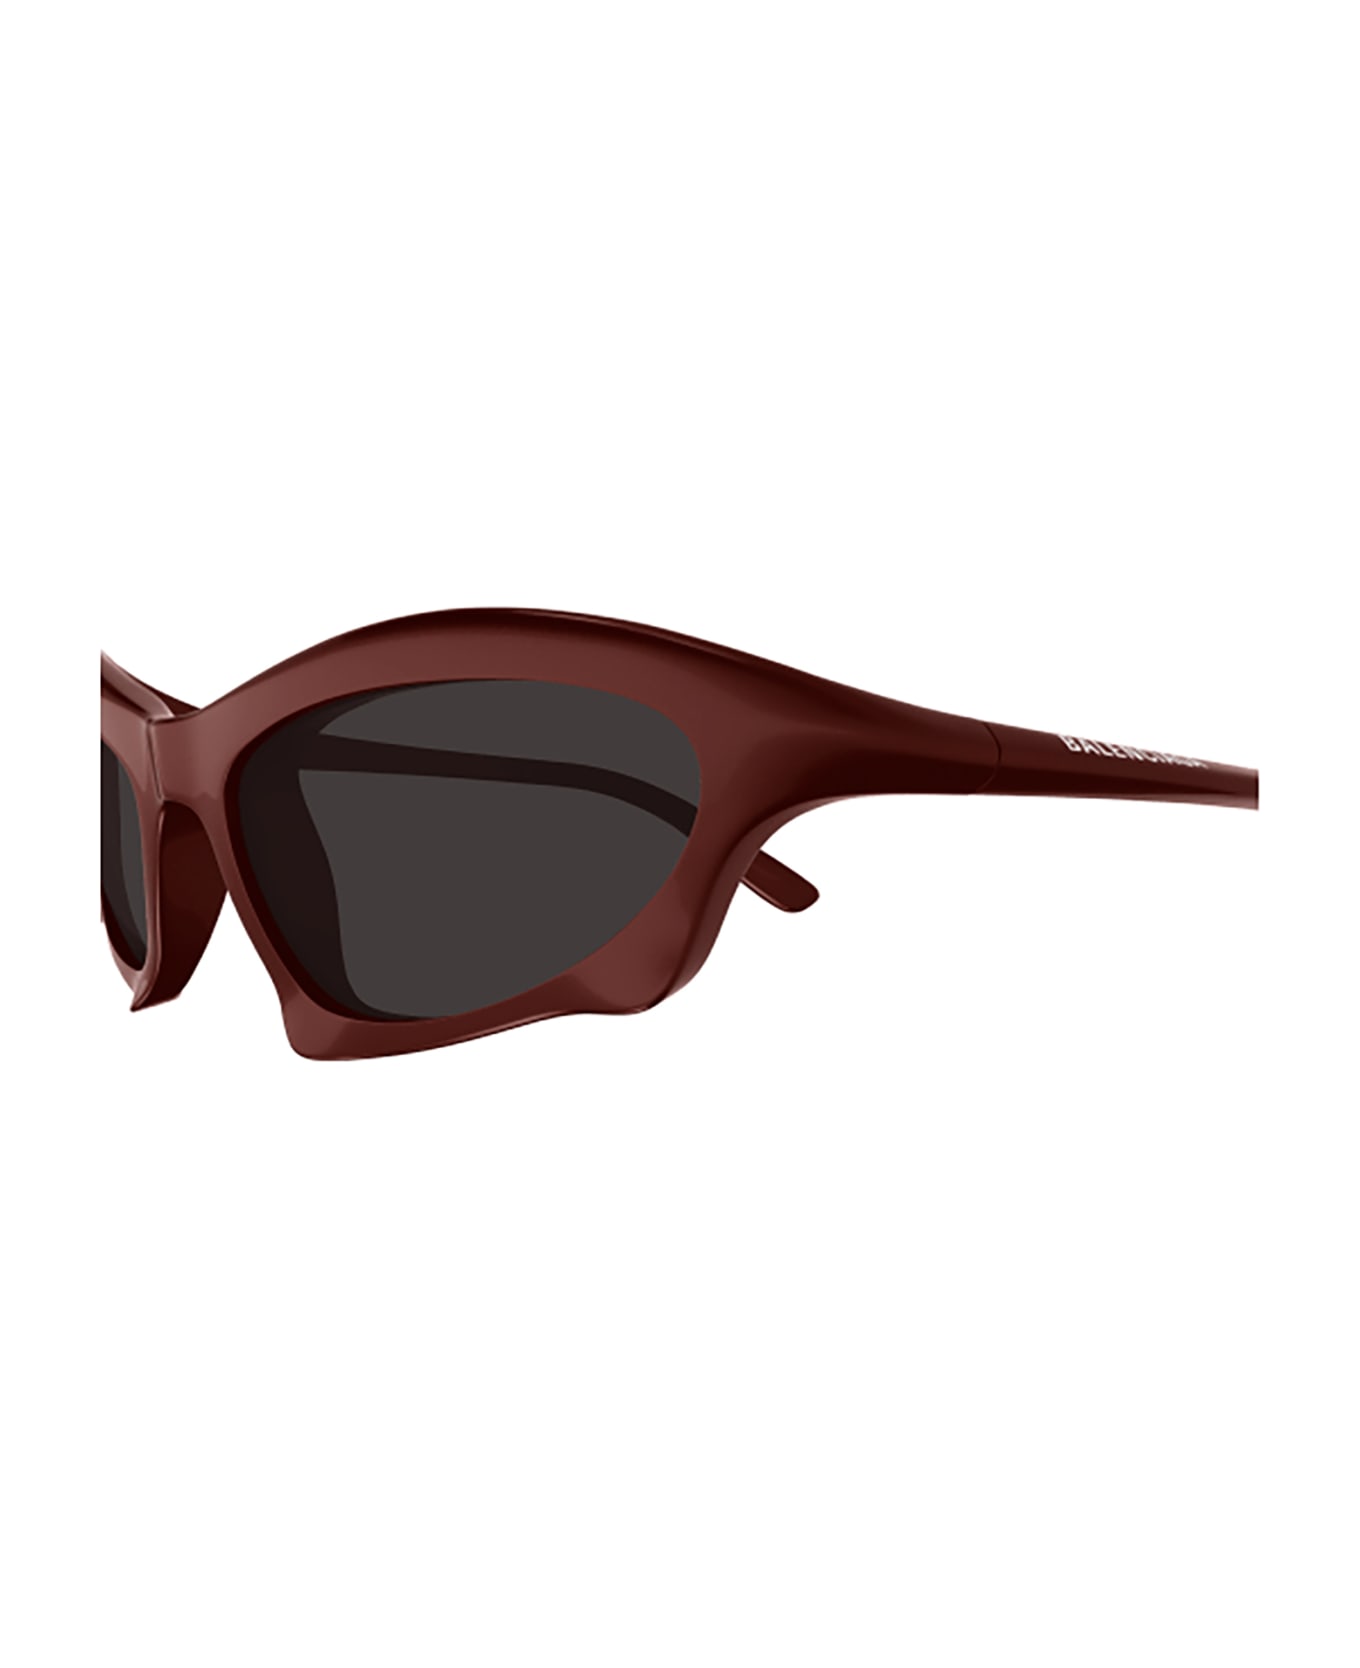 Balenciaga Eyewear Bb0229s Sunglasses - 005 BURGUNDY BURGUNDY GREY